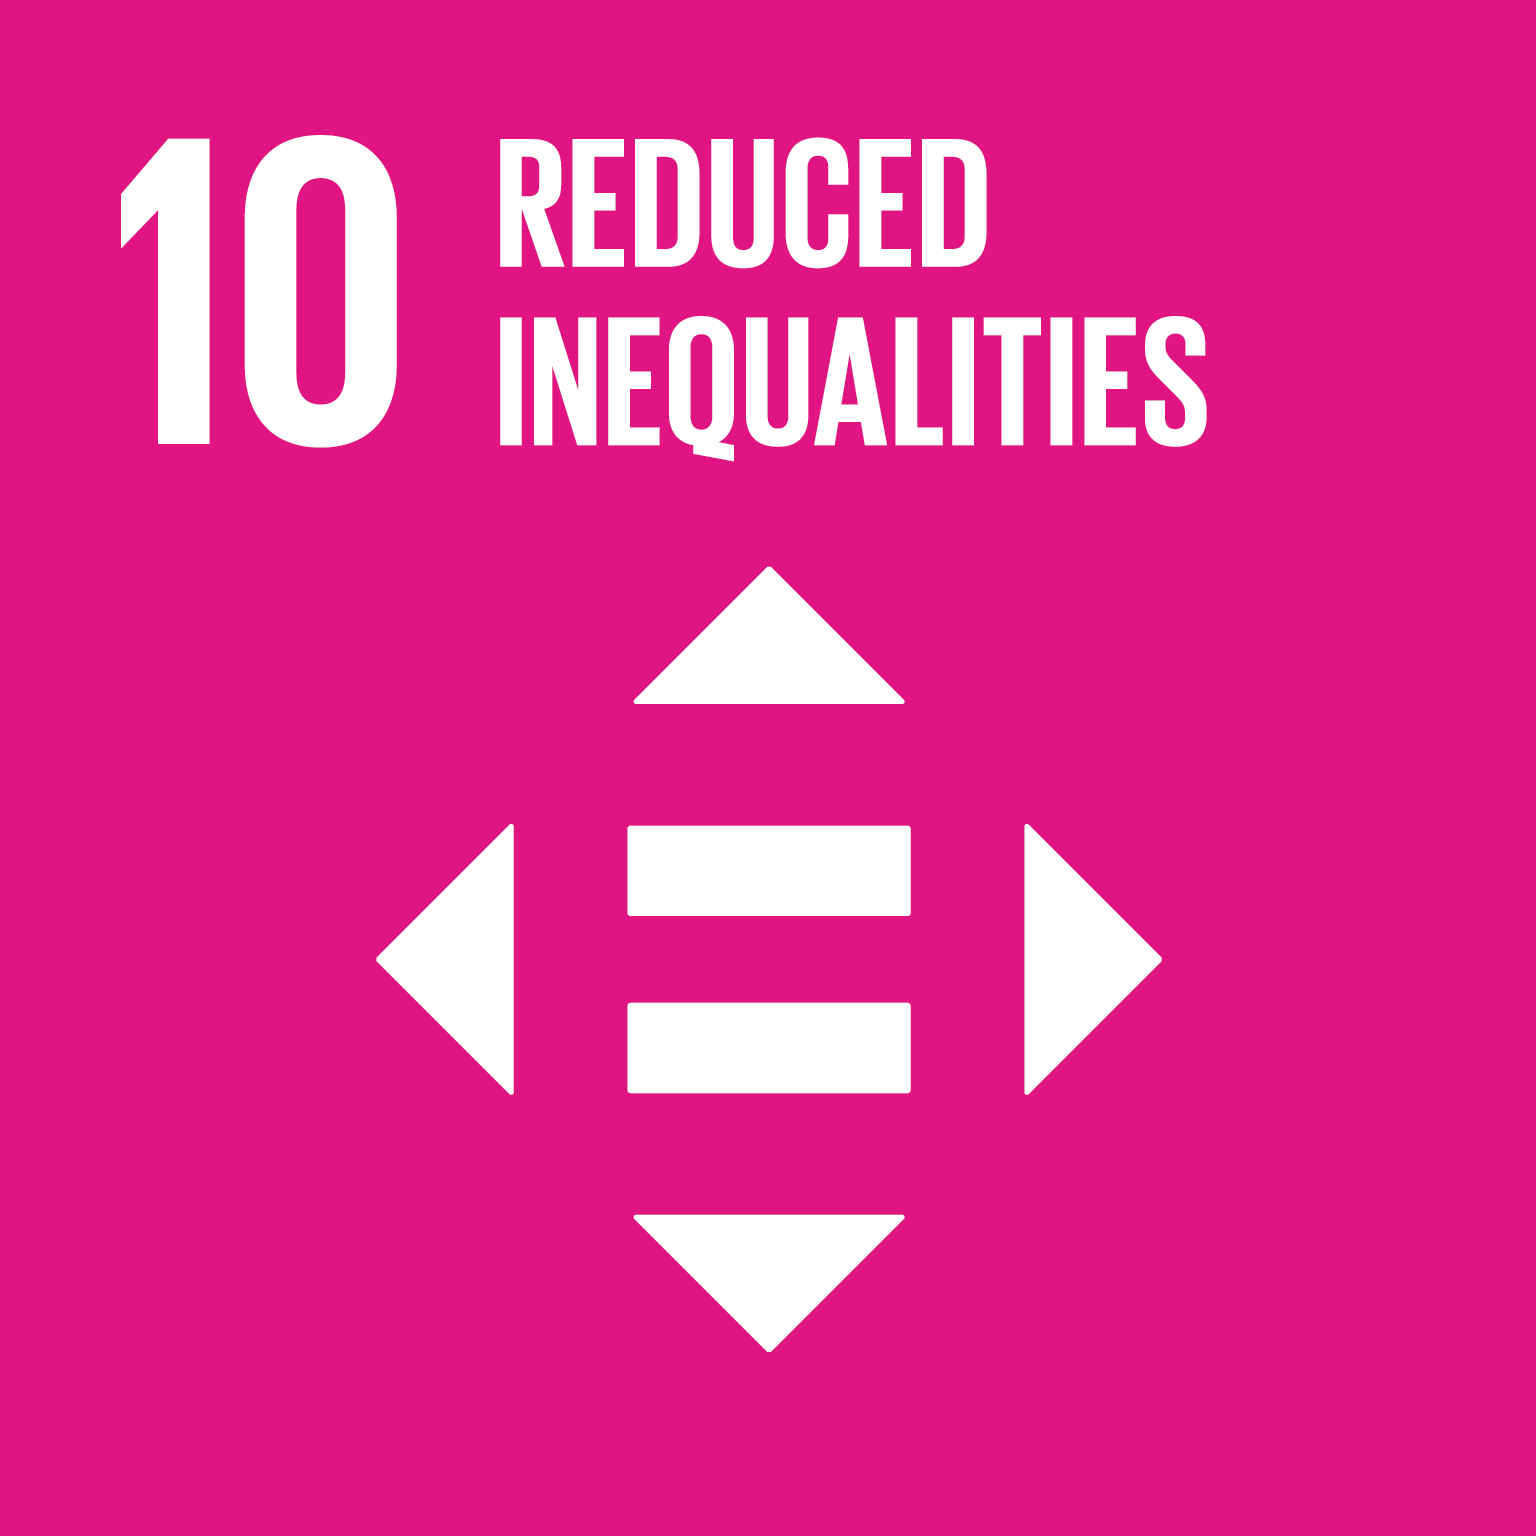 sustainable development goal 10 icon reduced inequalities